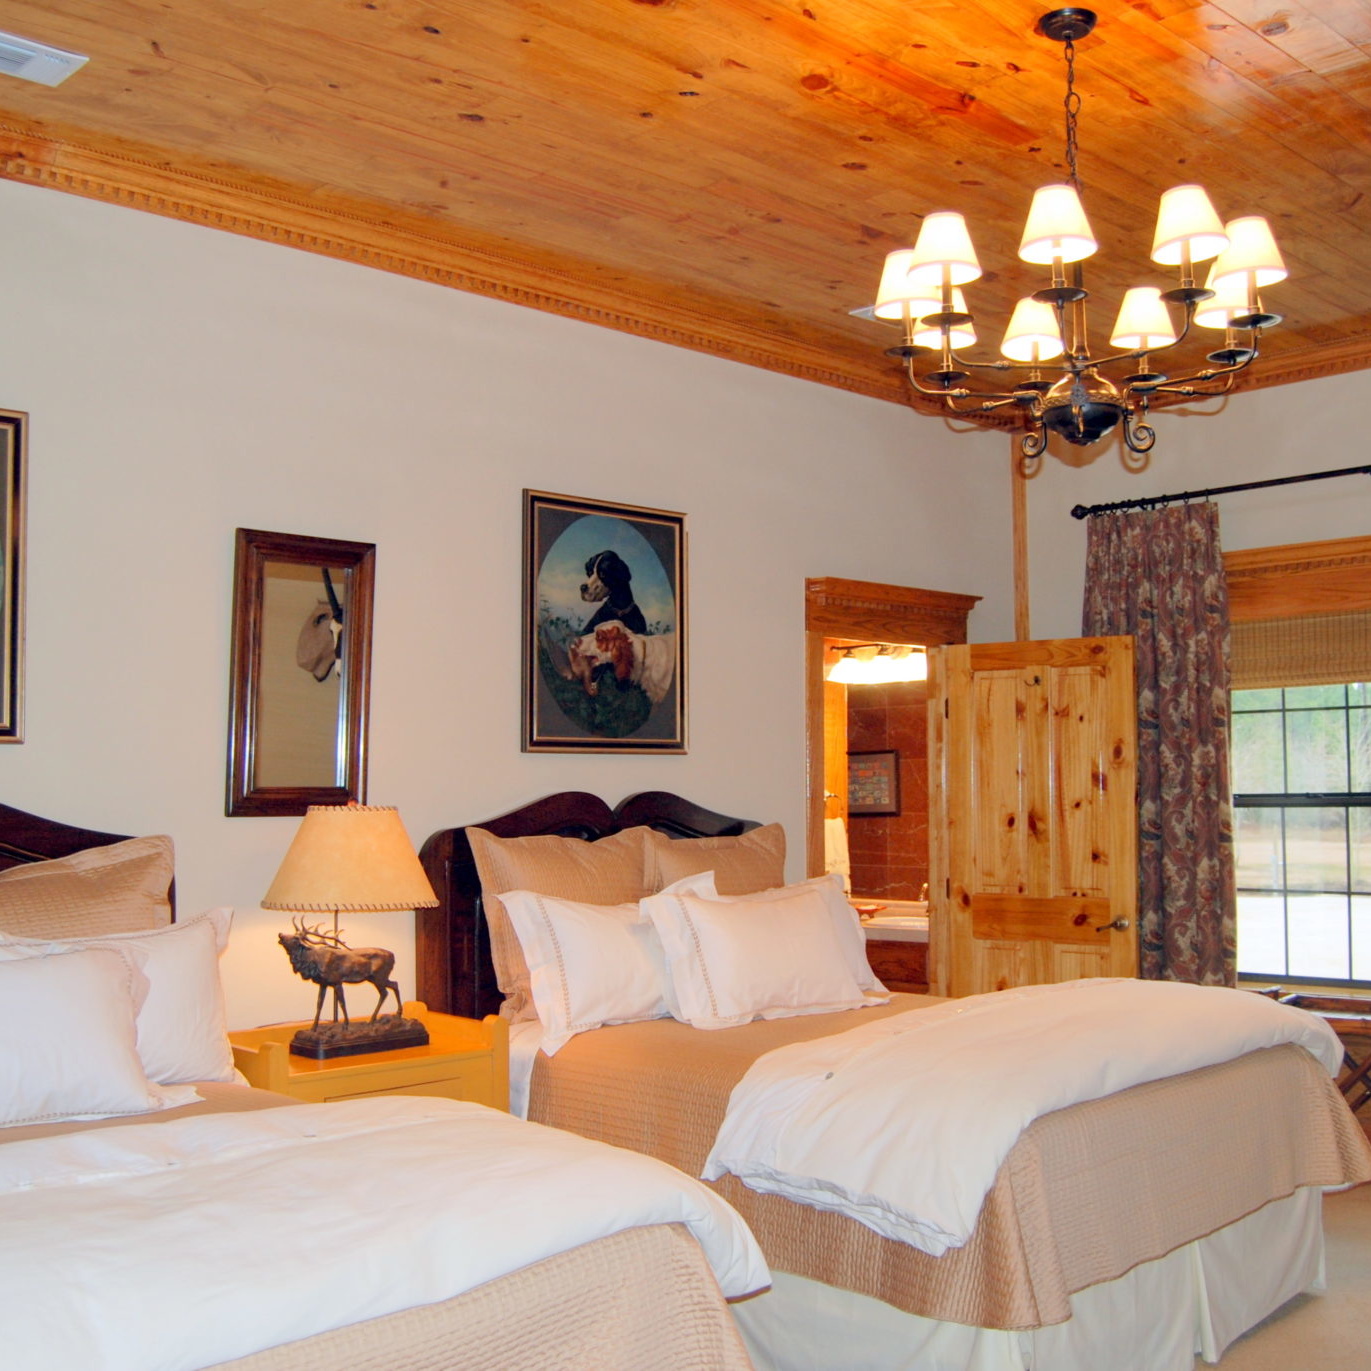 Cleveland ranch home bedroom interior design